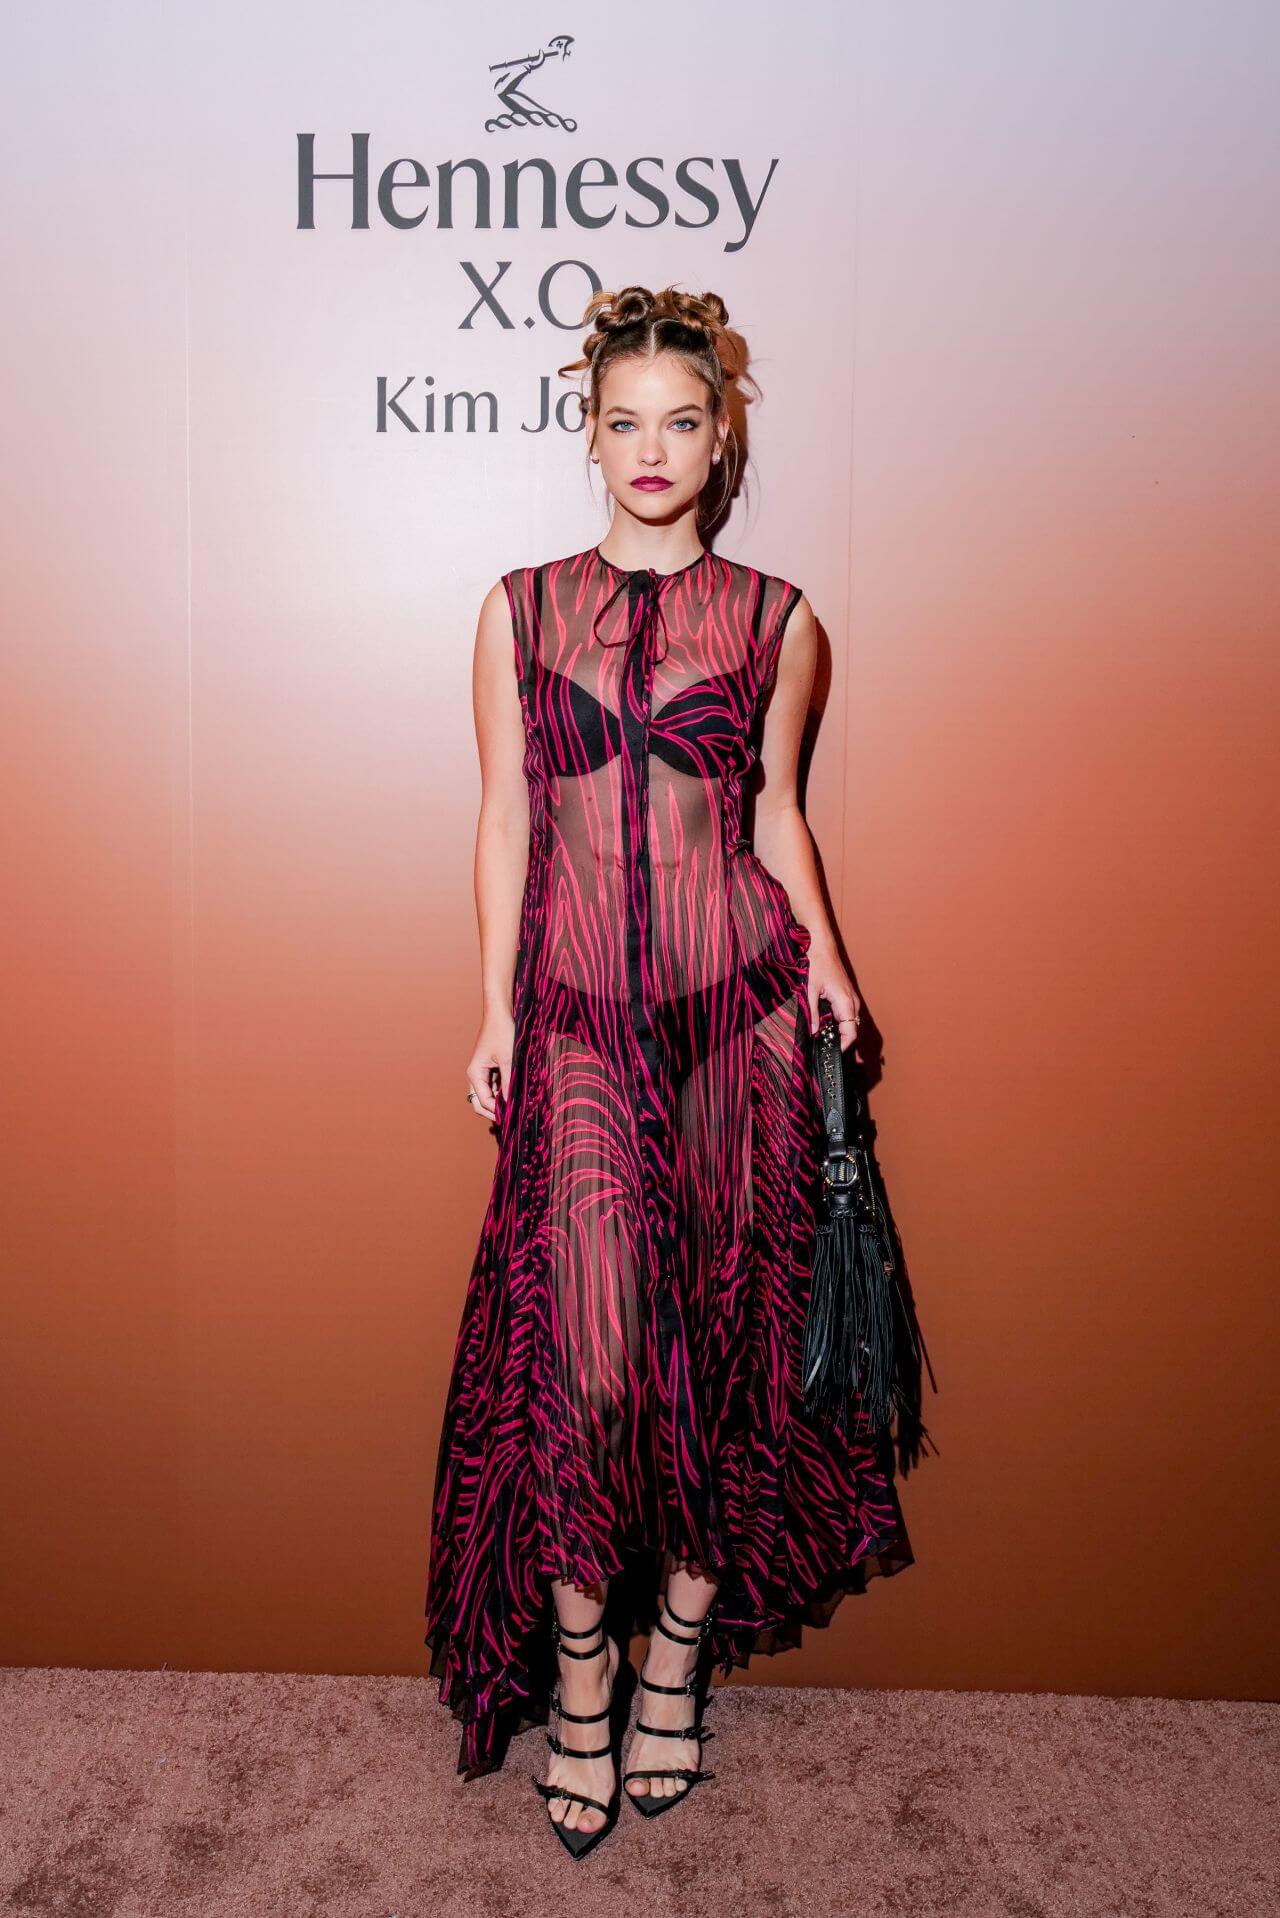 Barbara Palvin  In Pink Printed Sheering Long Ruffle Dress At Hennessy X.O x Kim Jones “X.O Lab” Pop-Up in NYC